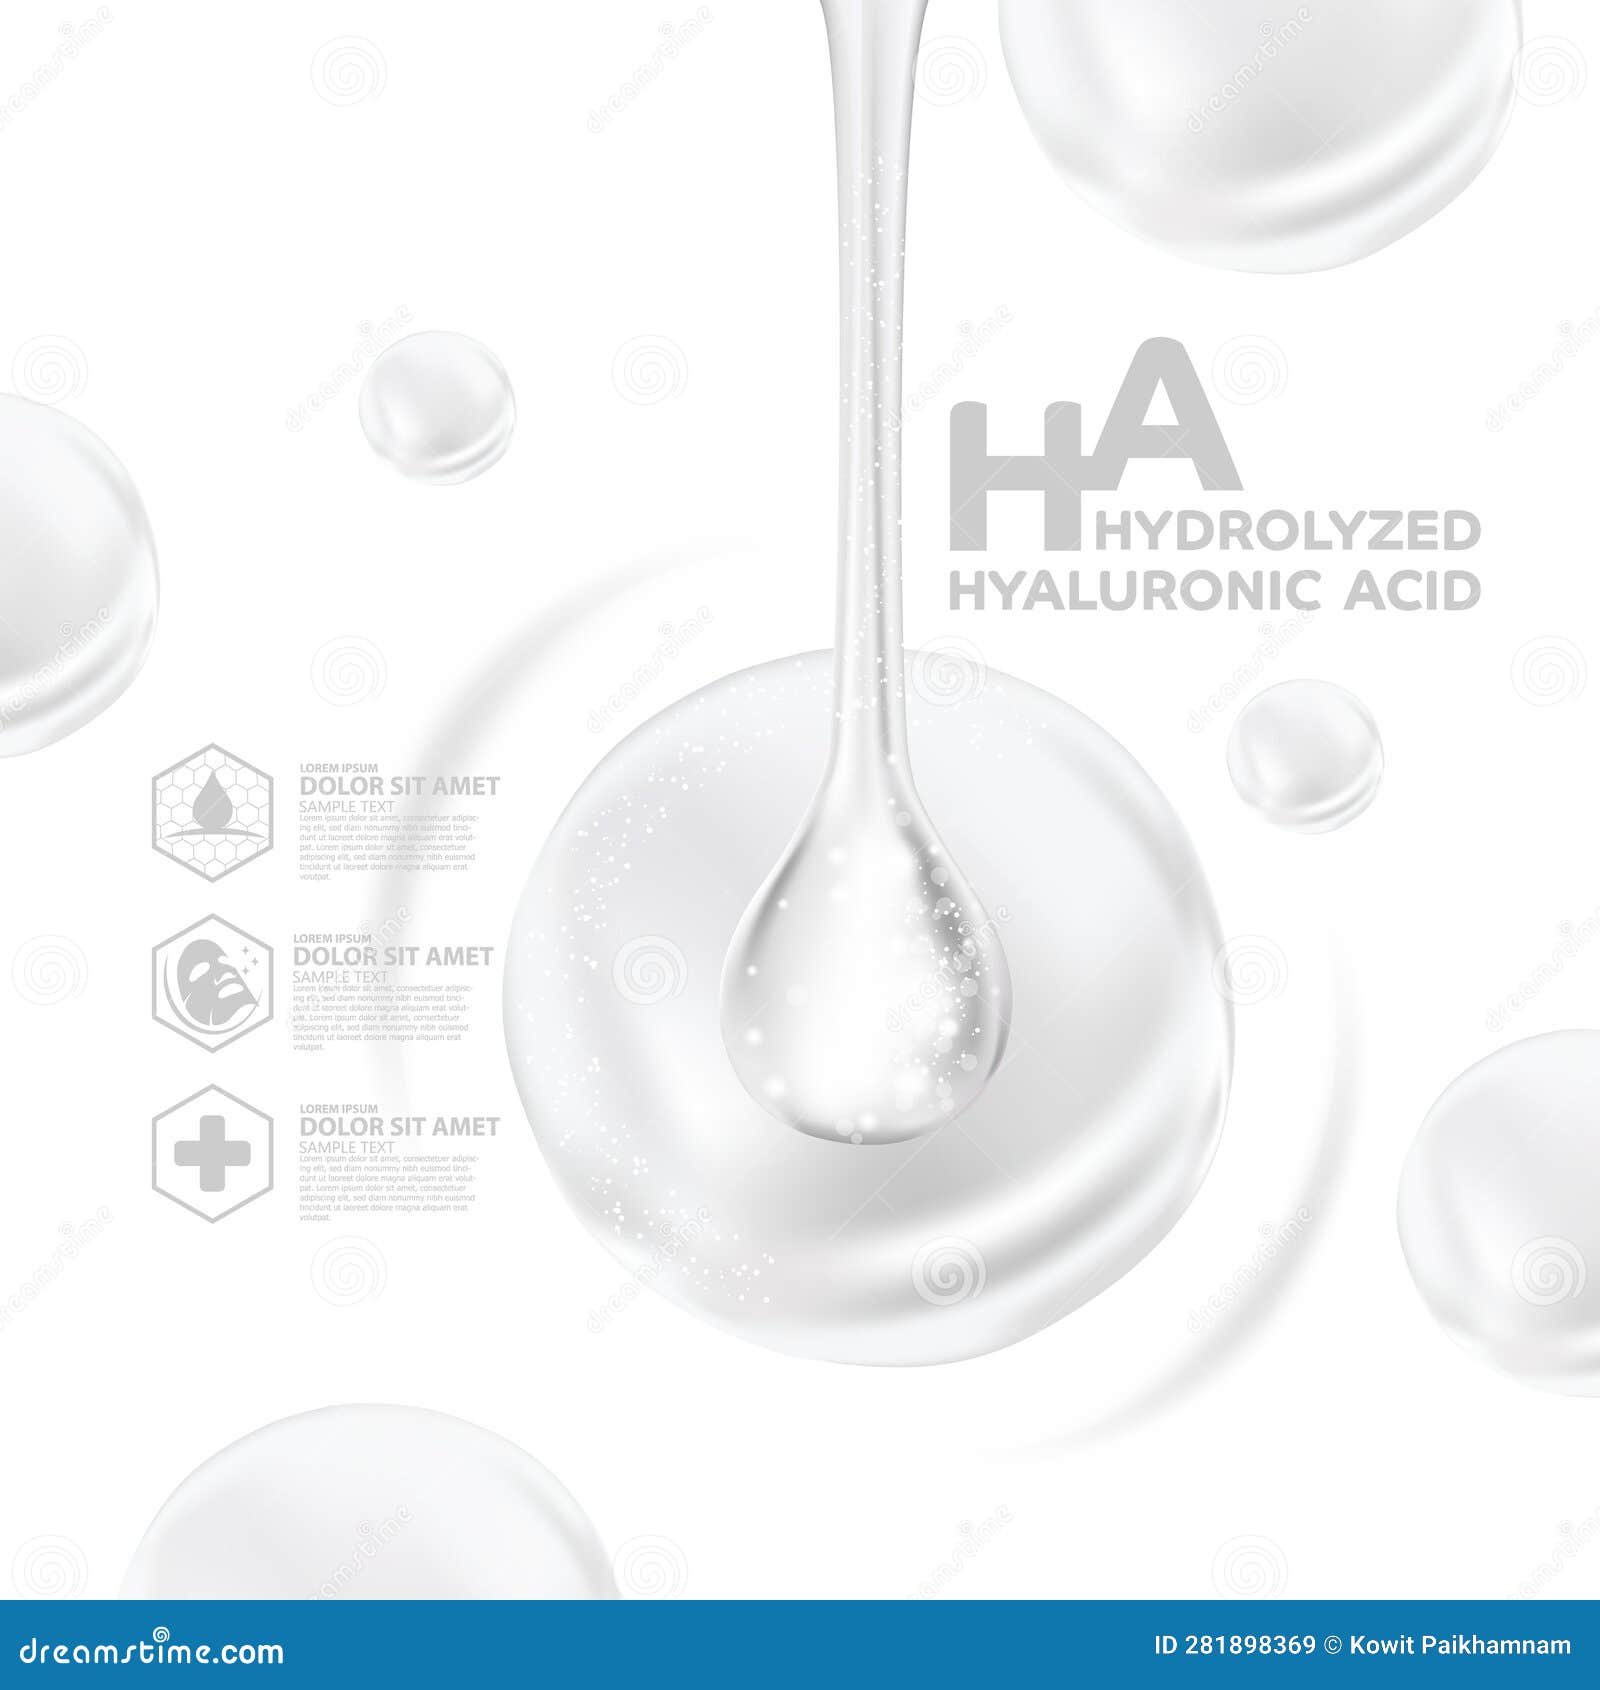 hydrolyzed hyaluronic acid serum skin care cosmetic